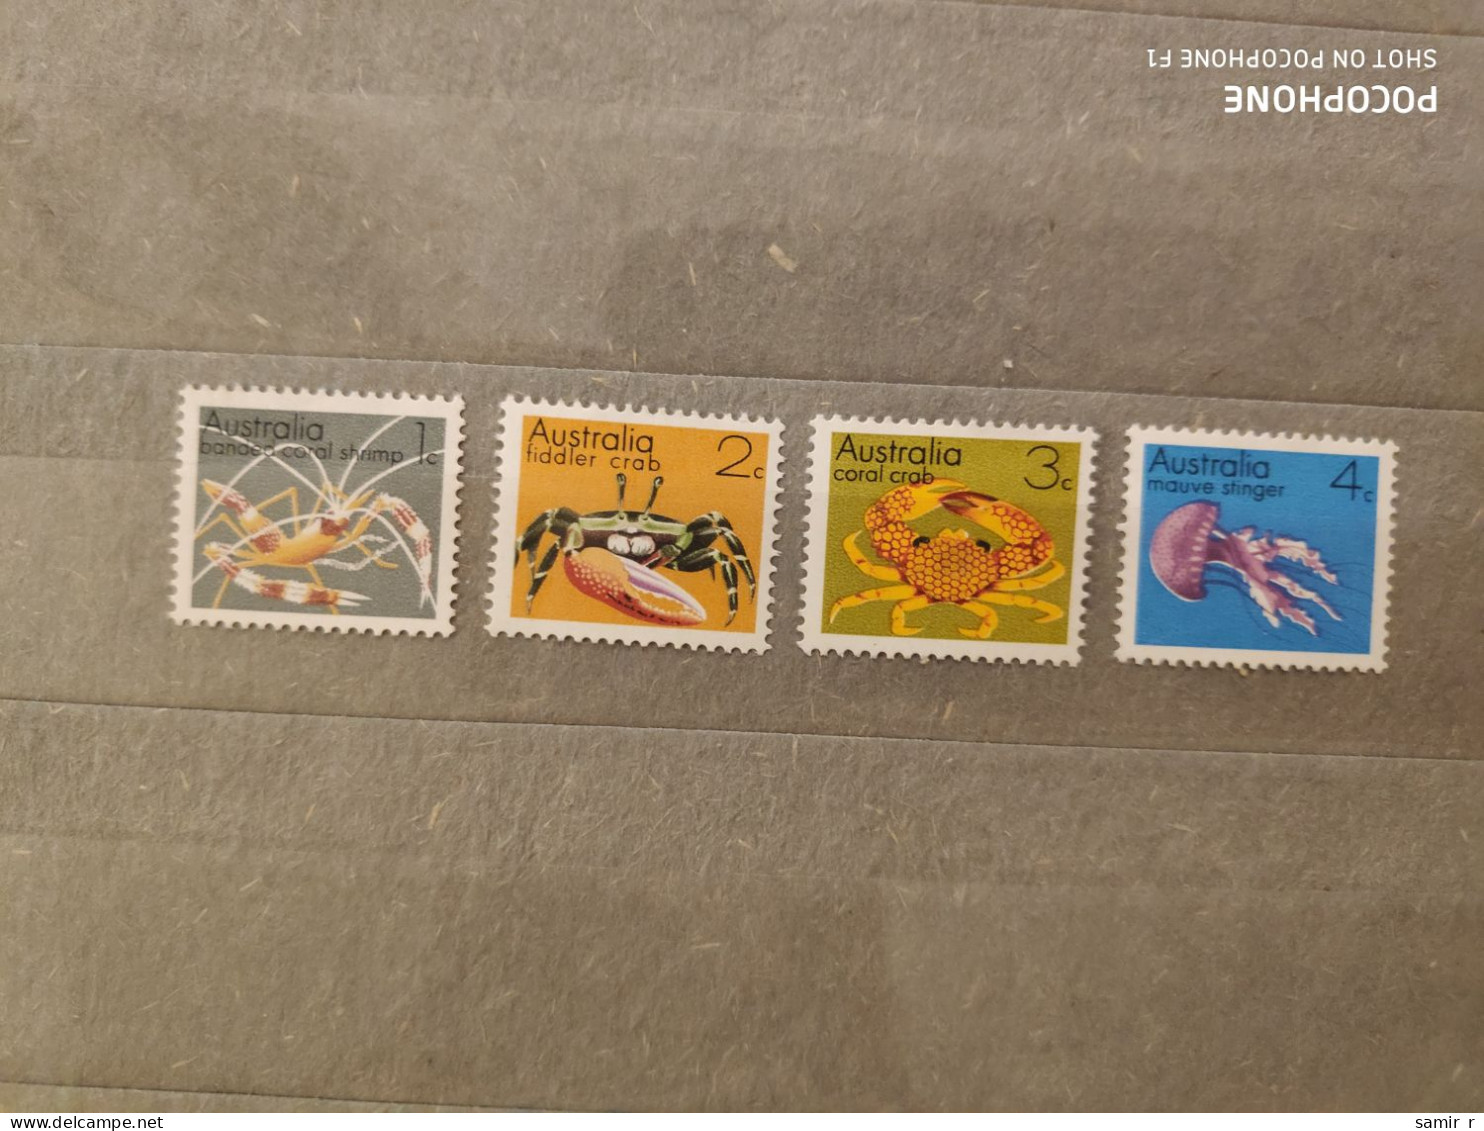 Australia	Crabs (F95) - Mint Stamps